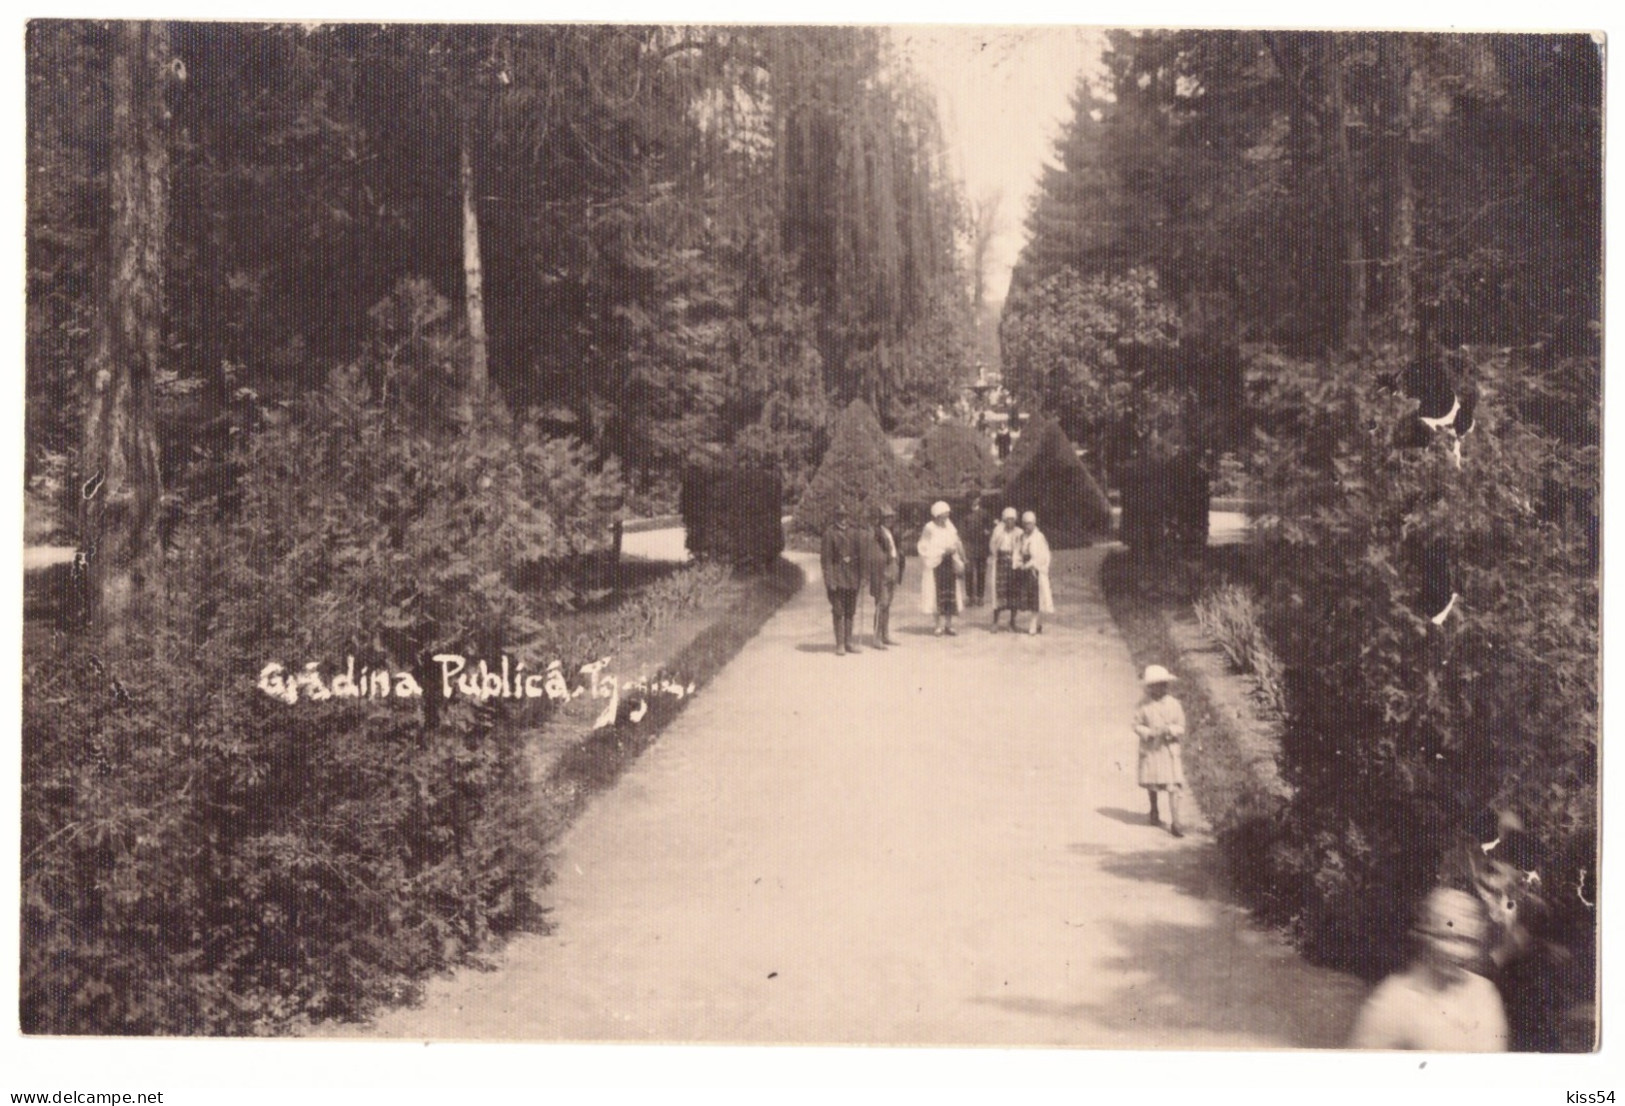 RO 38 - 18162 TARGU-JIU, Public Garden, Romania - Old Postcard, Real PHOTO - Unused - Roumanie